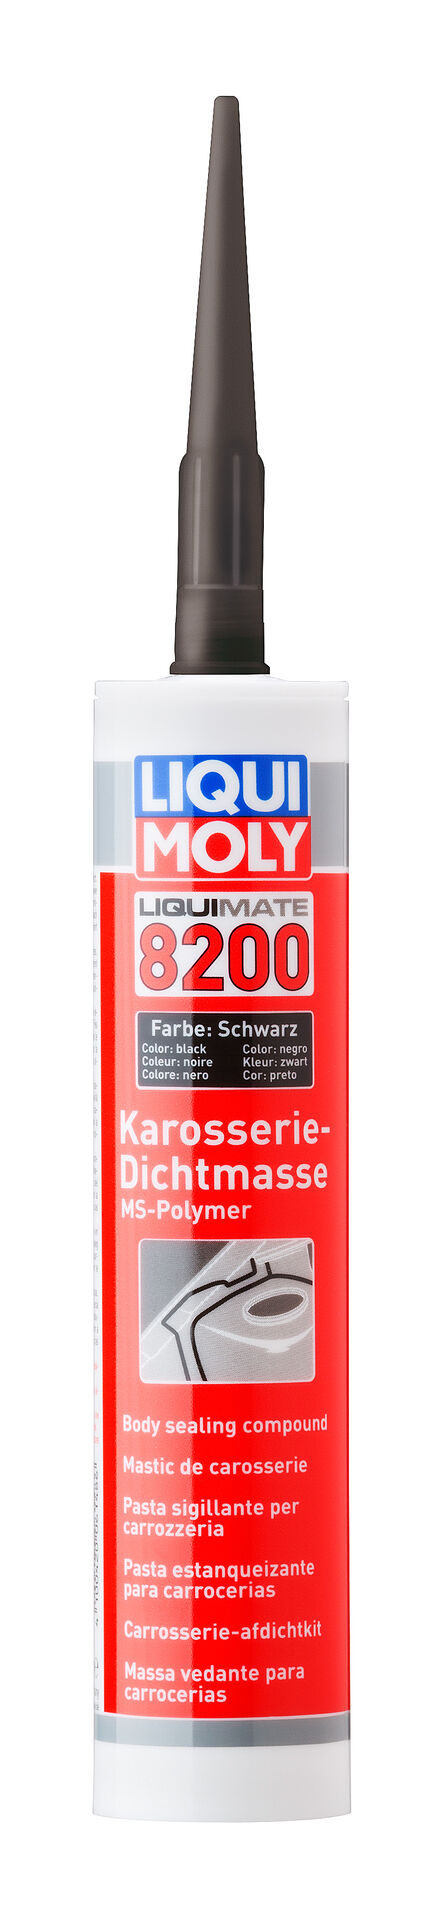 Liqui Moly Liquimate 8200 MS Polymer schwarz Karosserie Dichtmasse 290 ml